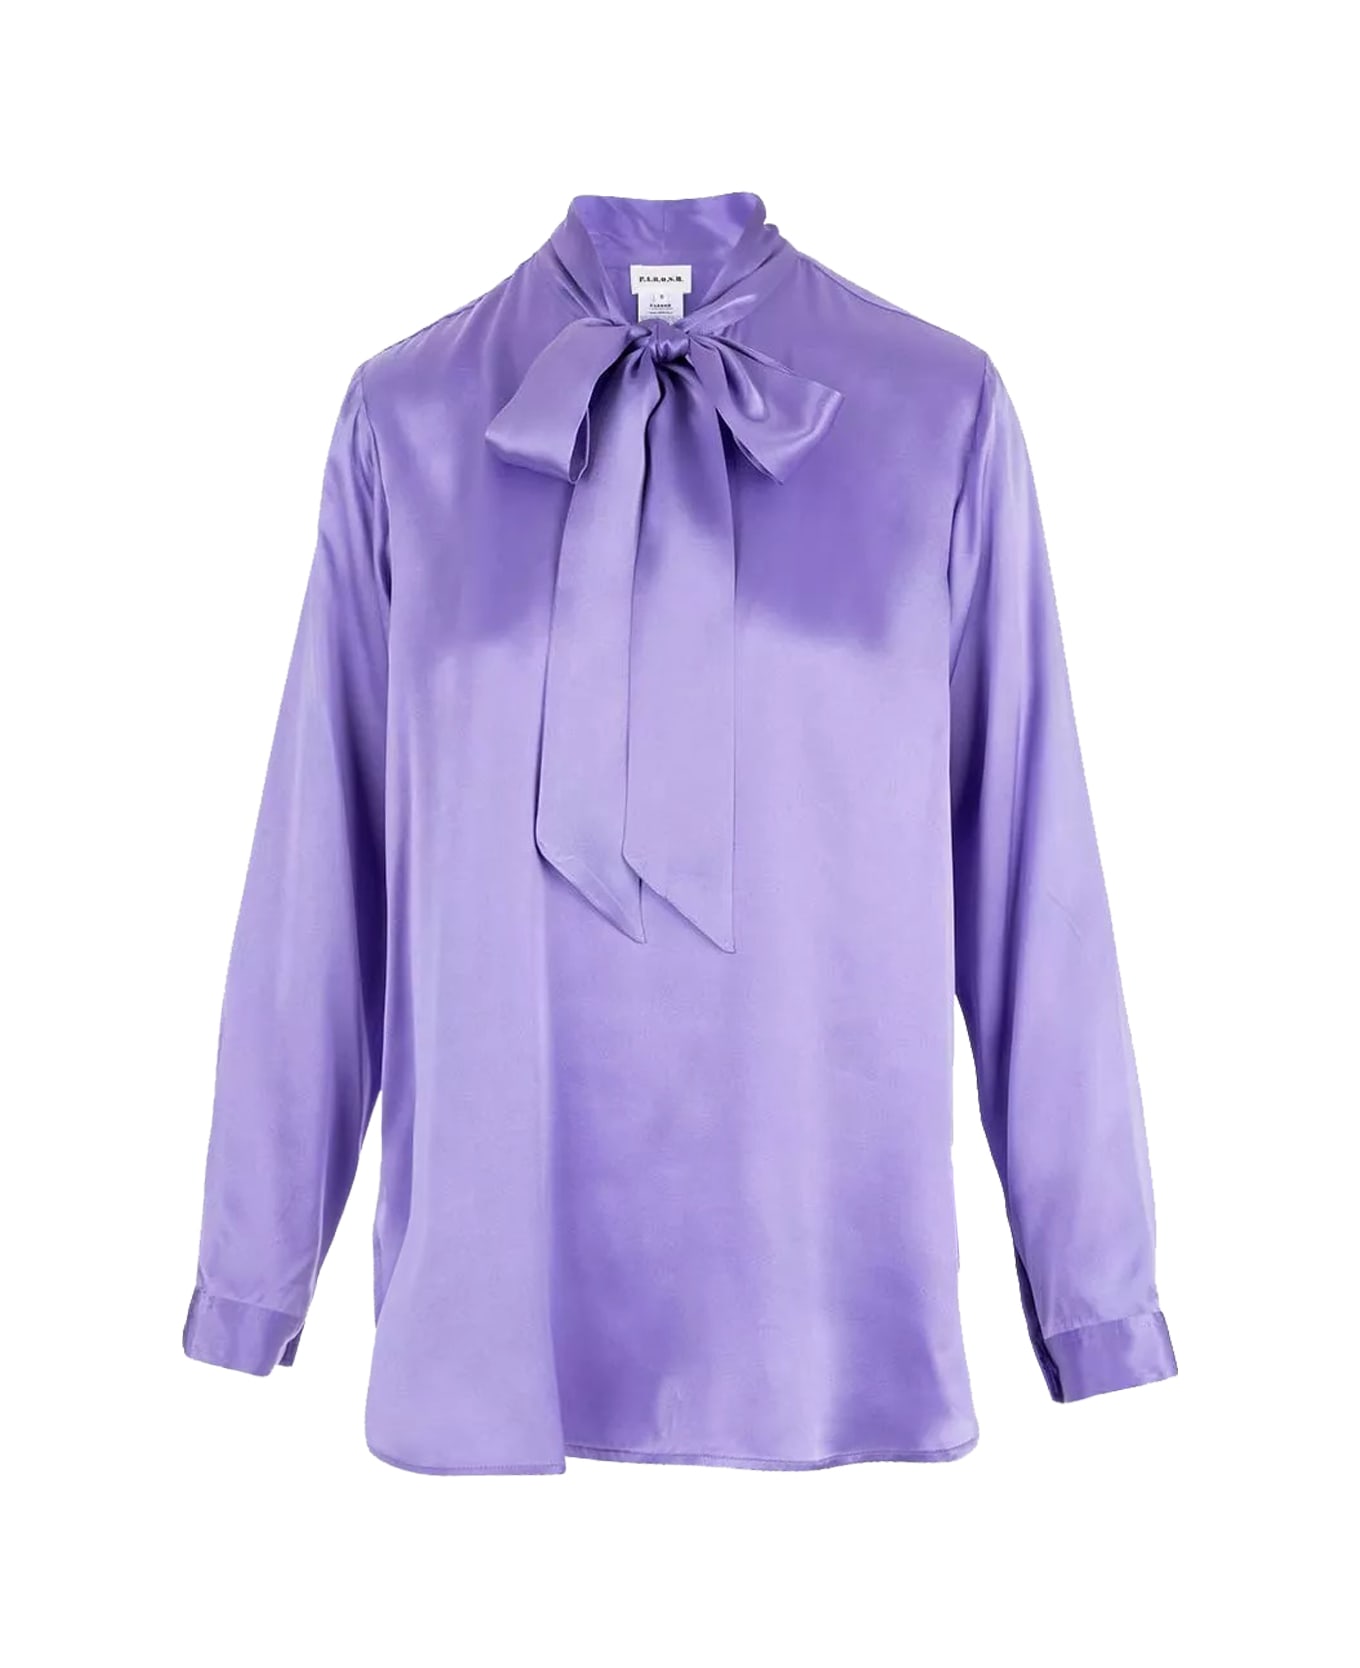 Parosh Shirt - Lilac ブラウス